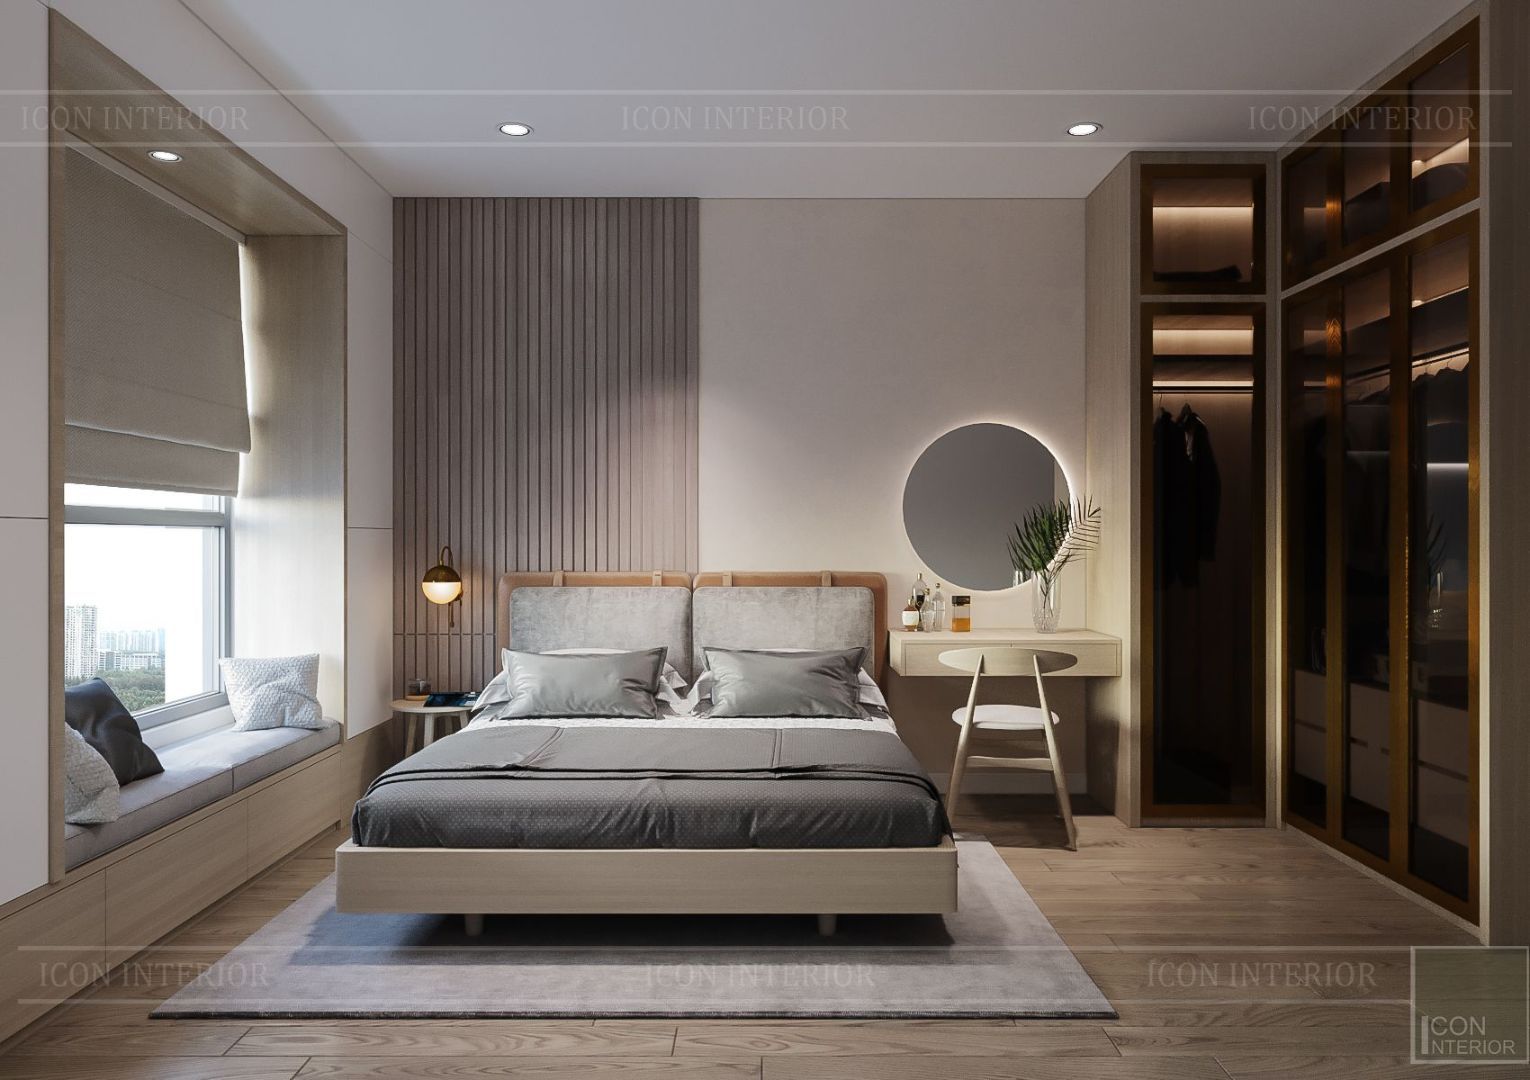 Nội thất phong cách tối giản Minimalism, ICON INTERIOR ICON INTERIOR غرفة نوم